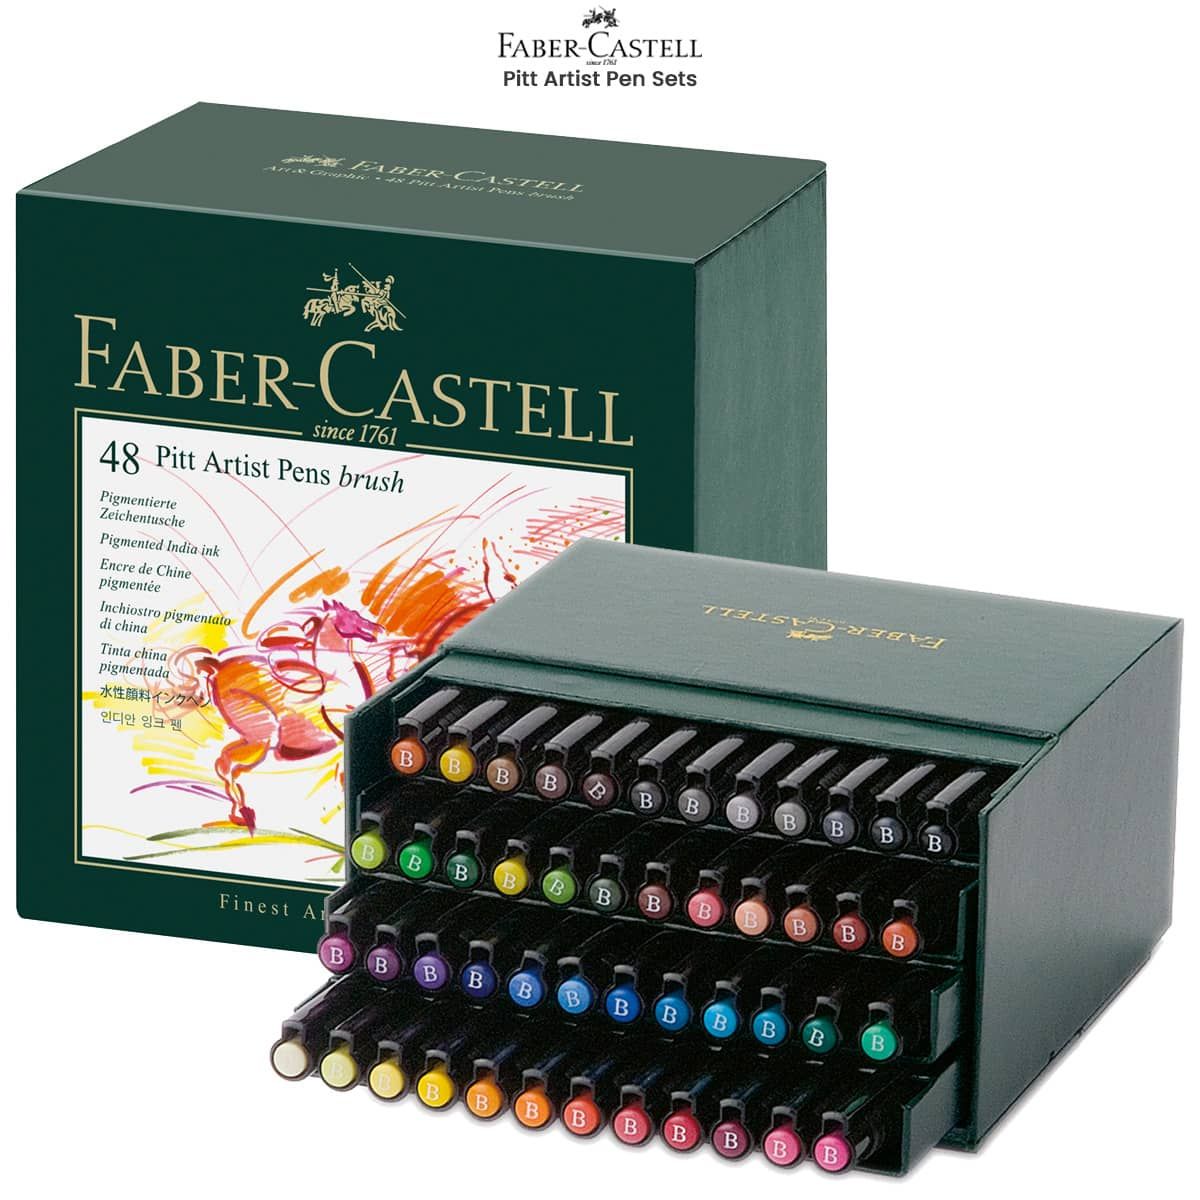 https://www.jerrysartarama.com/media/catalog/product/cache/ecb49a32eeb5603594b082bd5fe65733/f/a/faber-castell-pitt-artist-brush-pen-sets-main.jpg